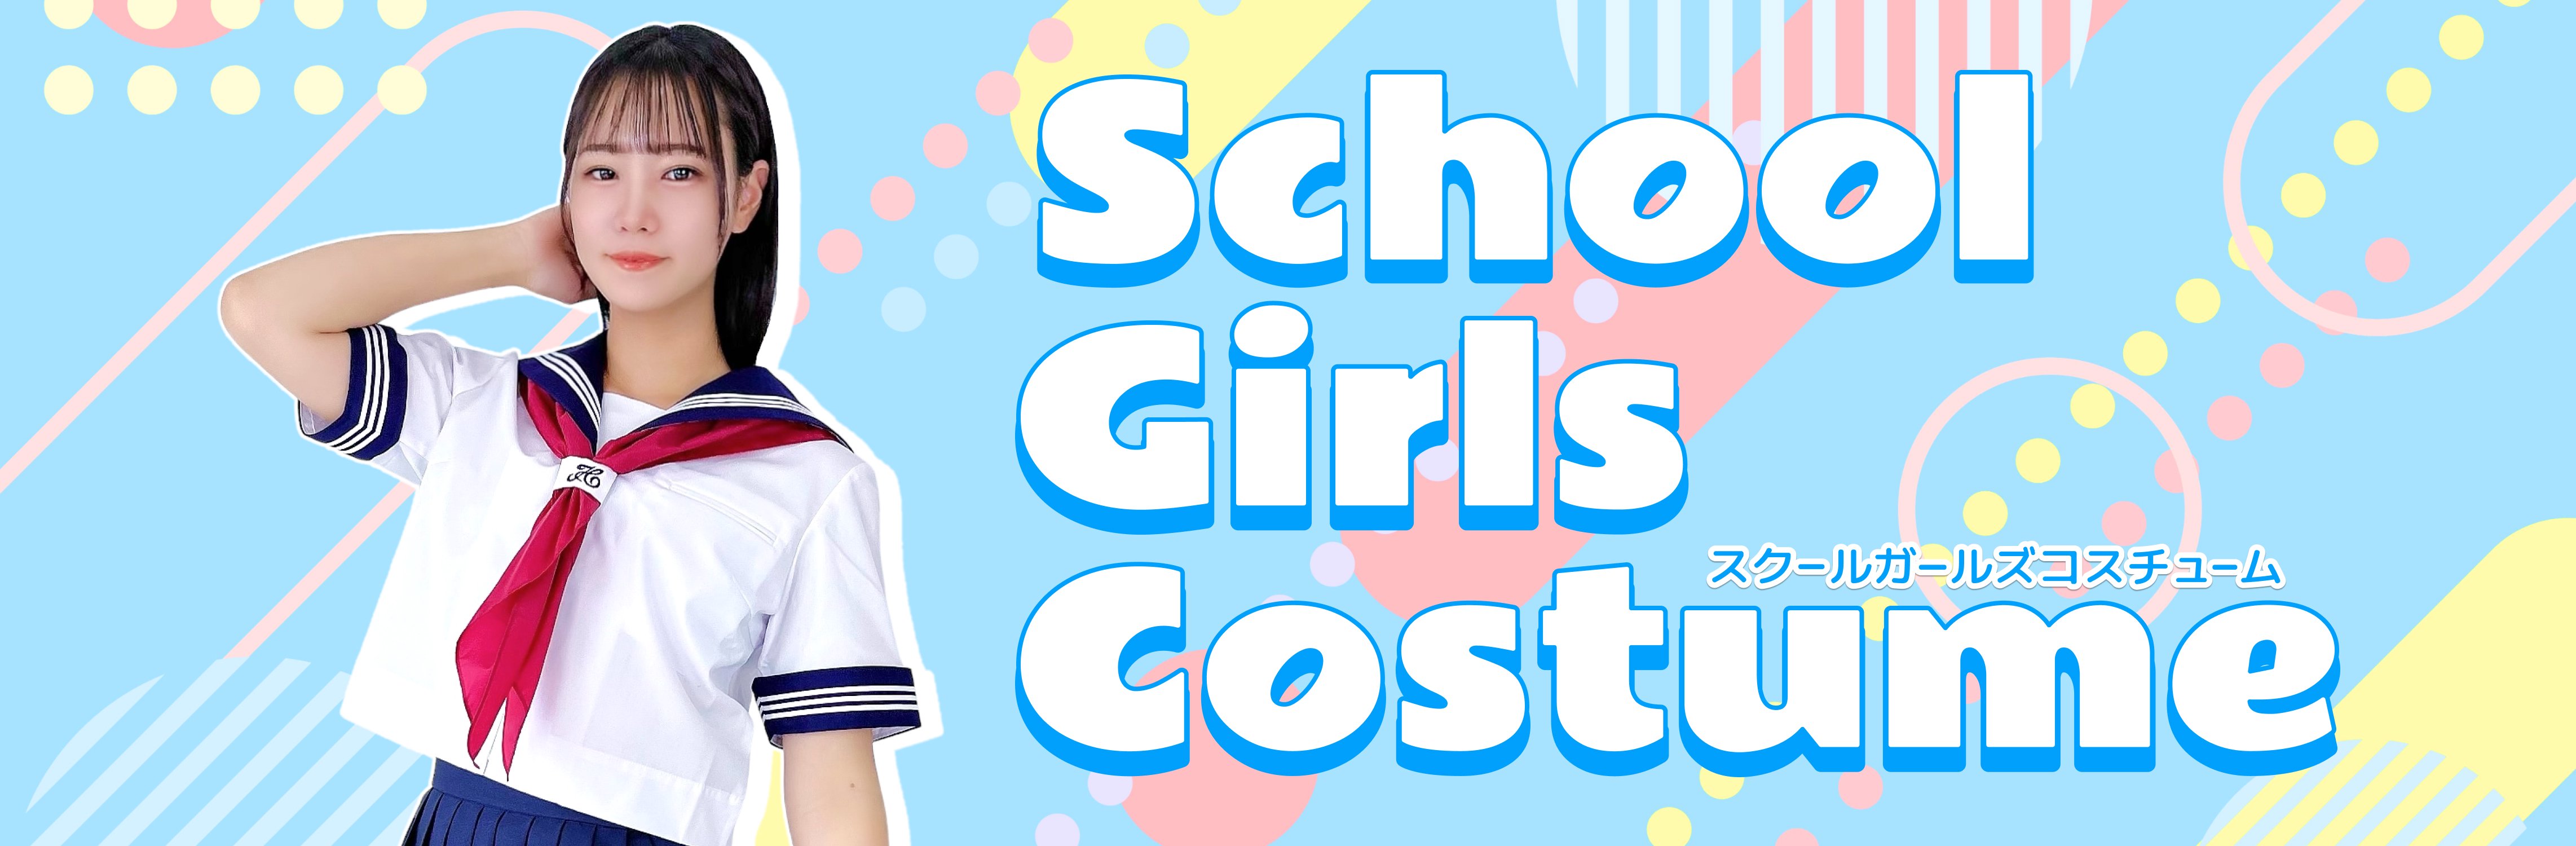 schoolgirlscostume.com